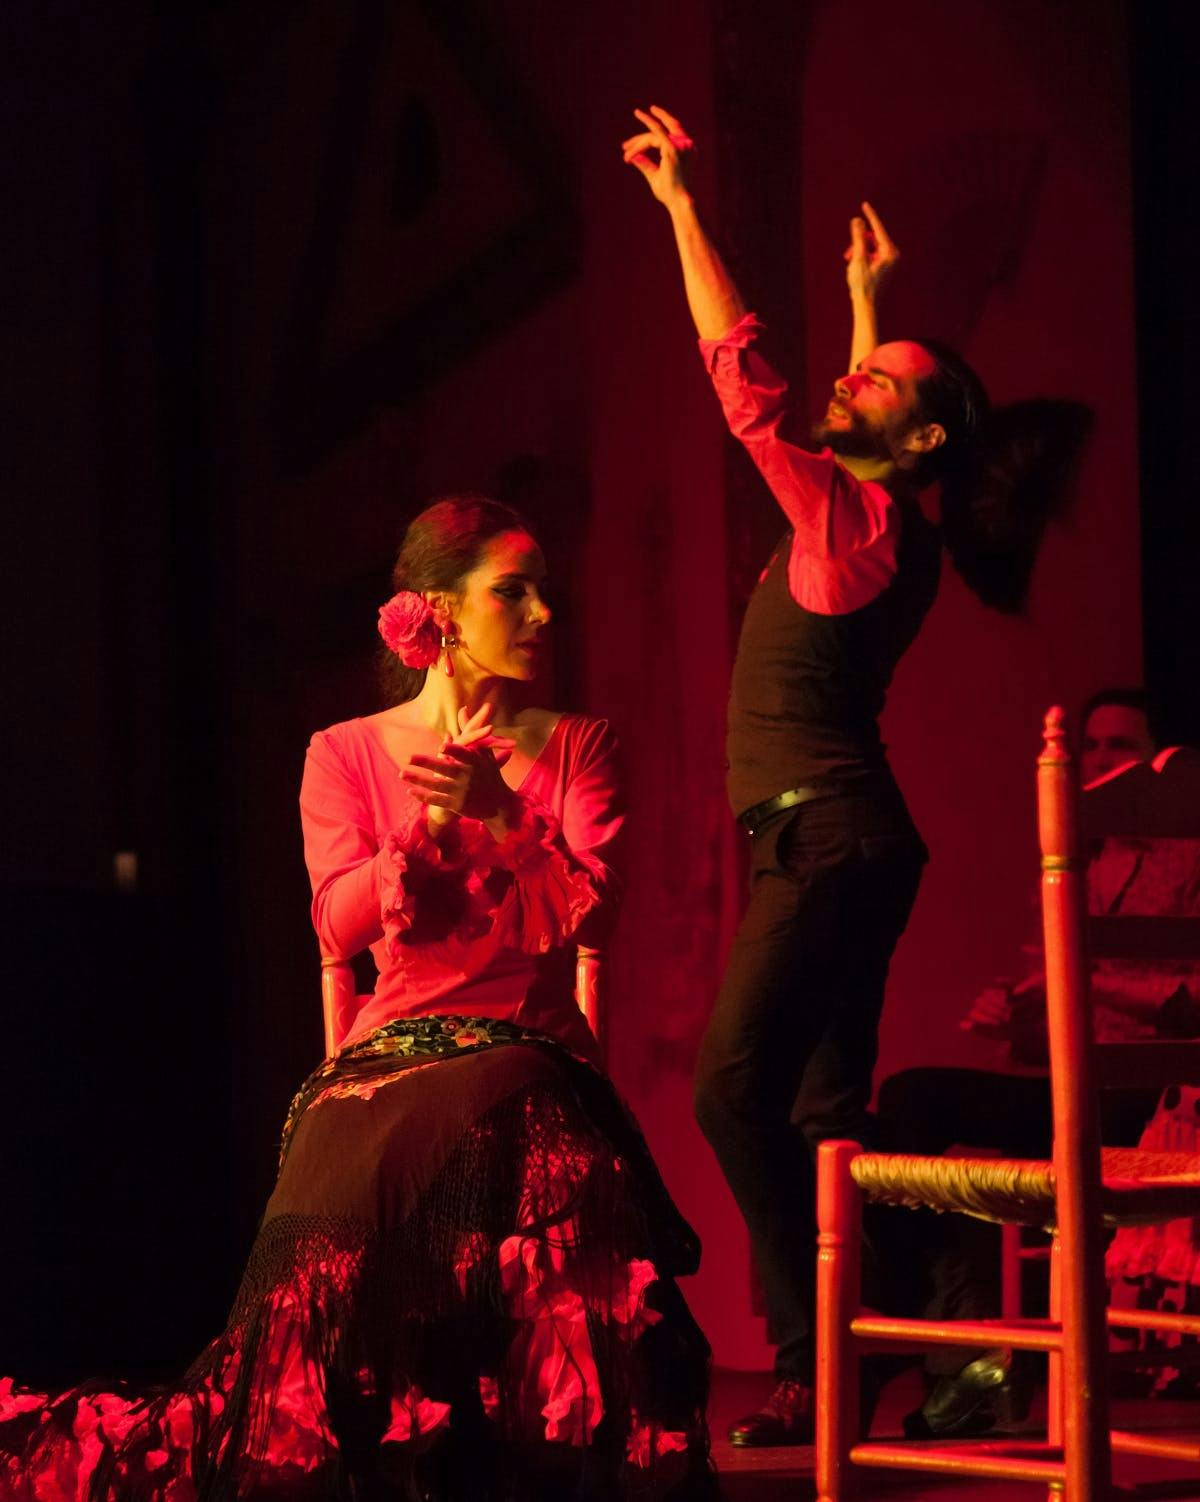 Toegangskaarten voor de flamencoshow in El Palacio Andaluz